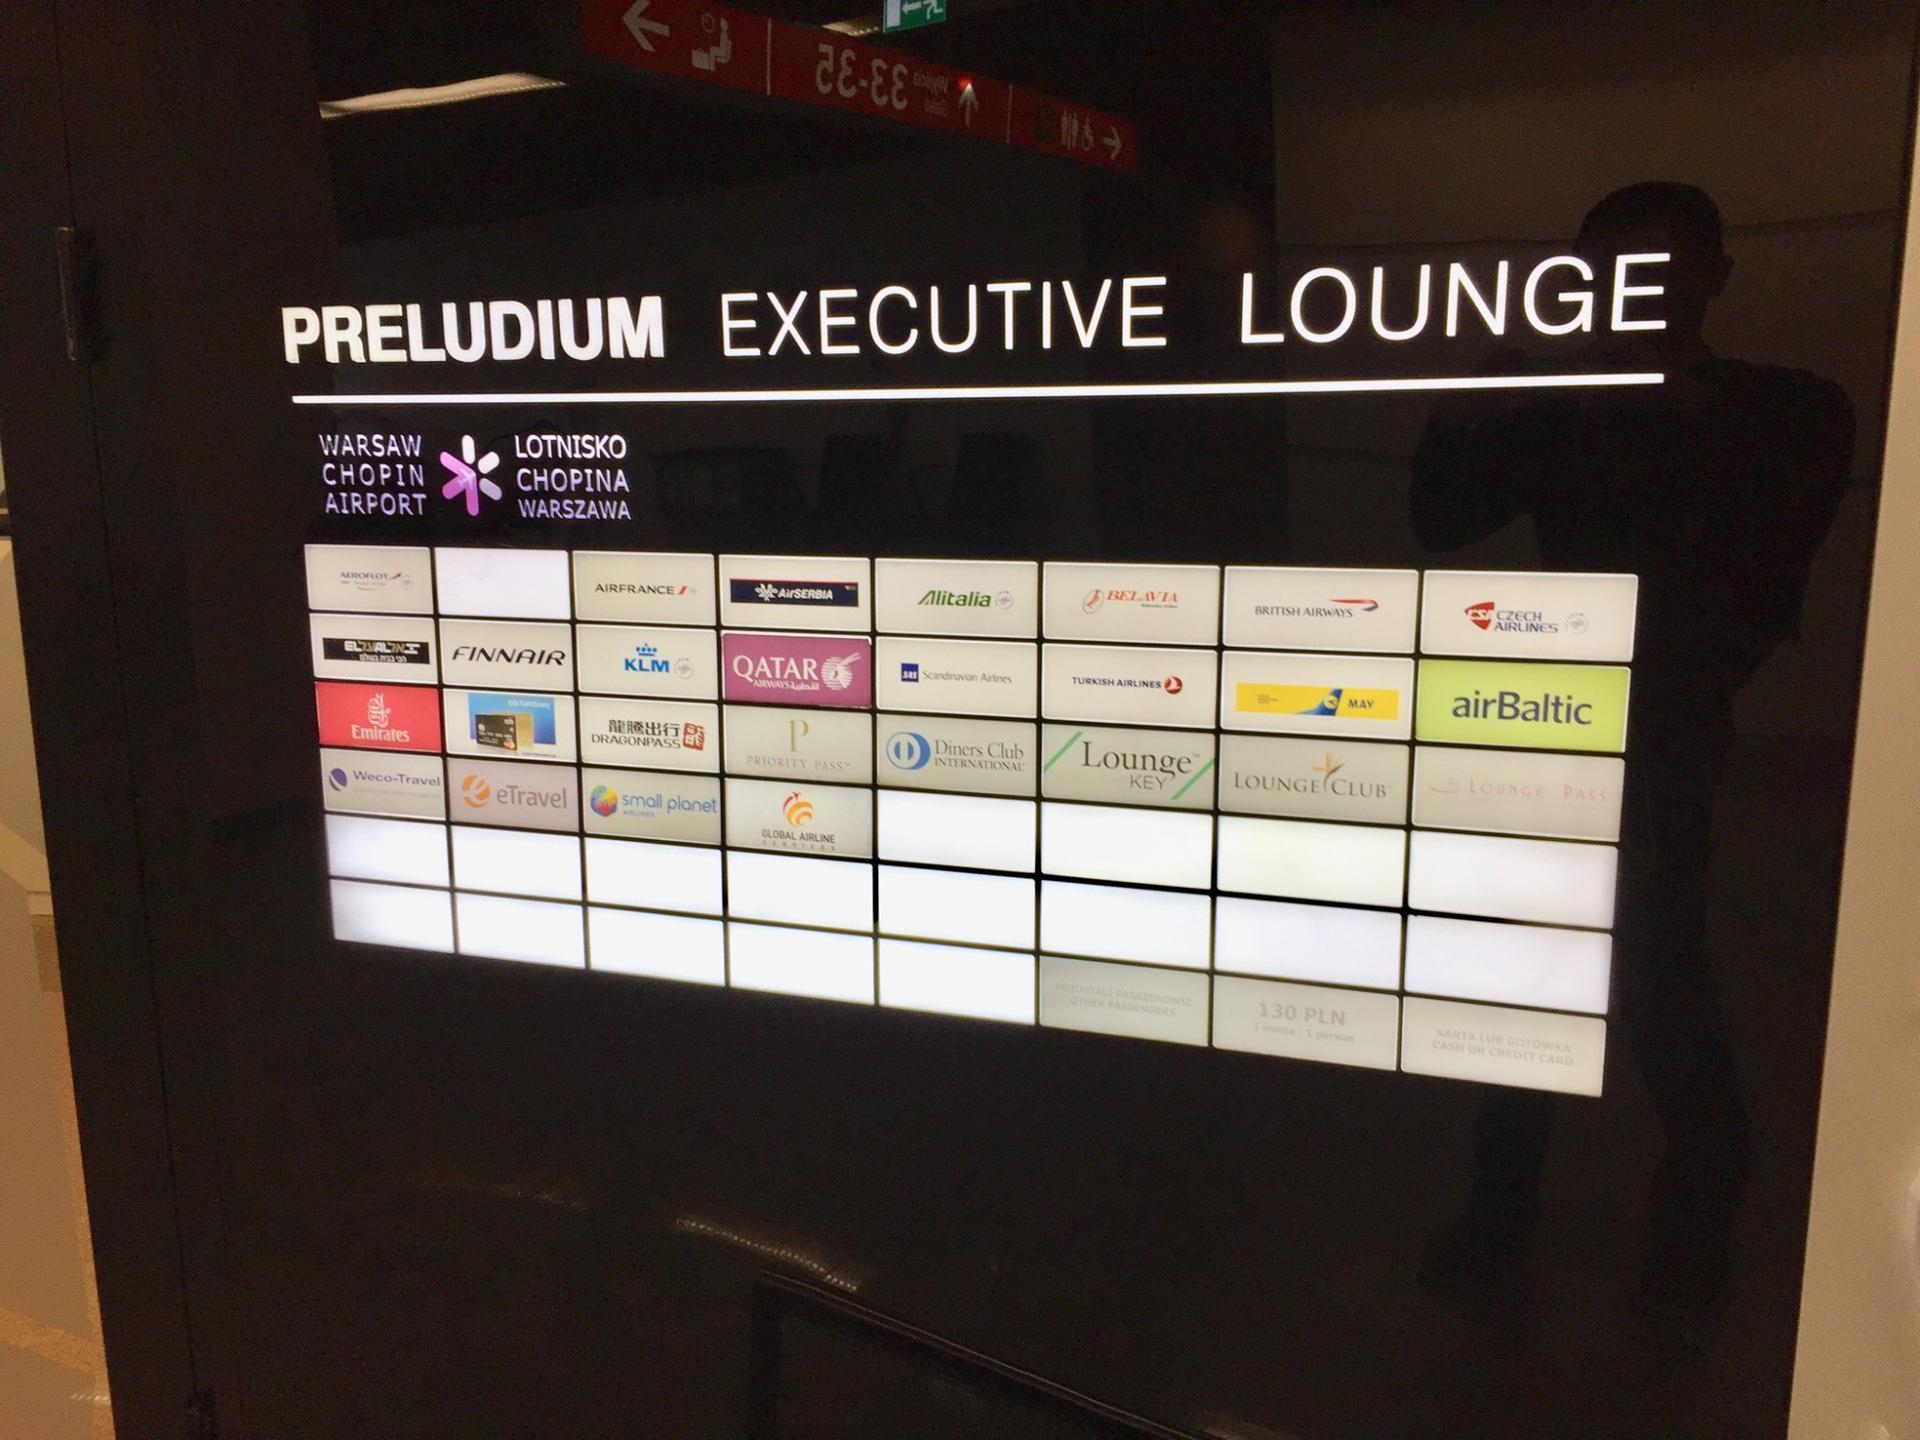 Preludium Executive Lounge image 18 of 59